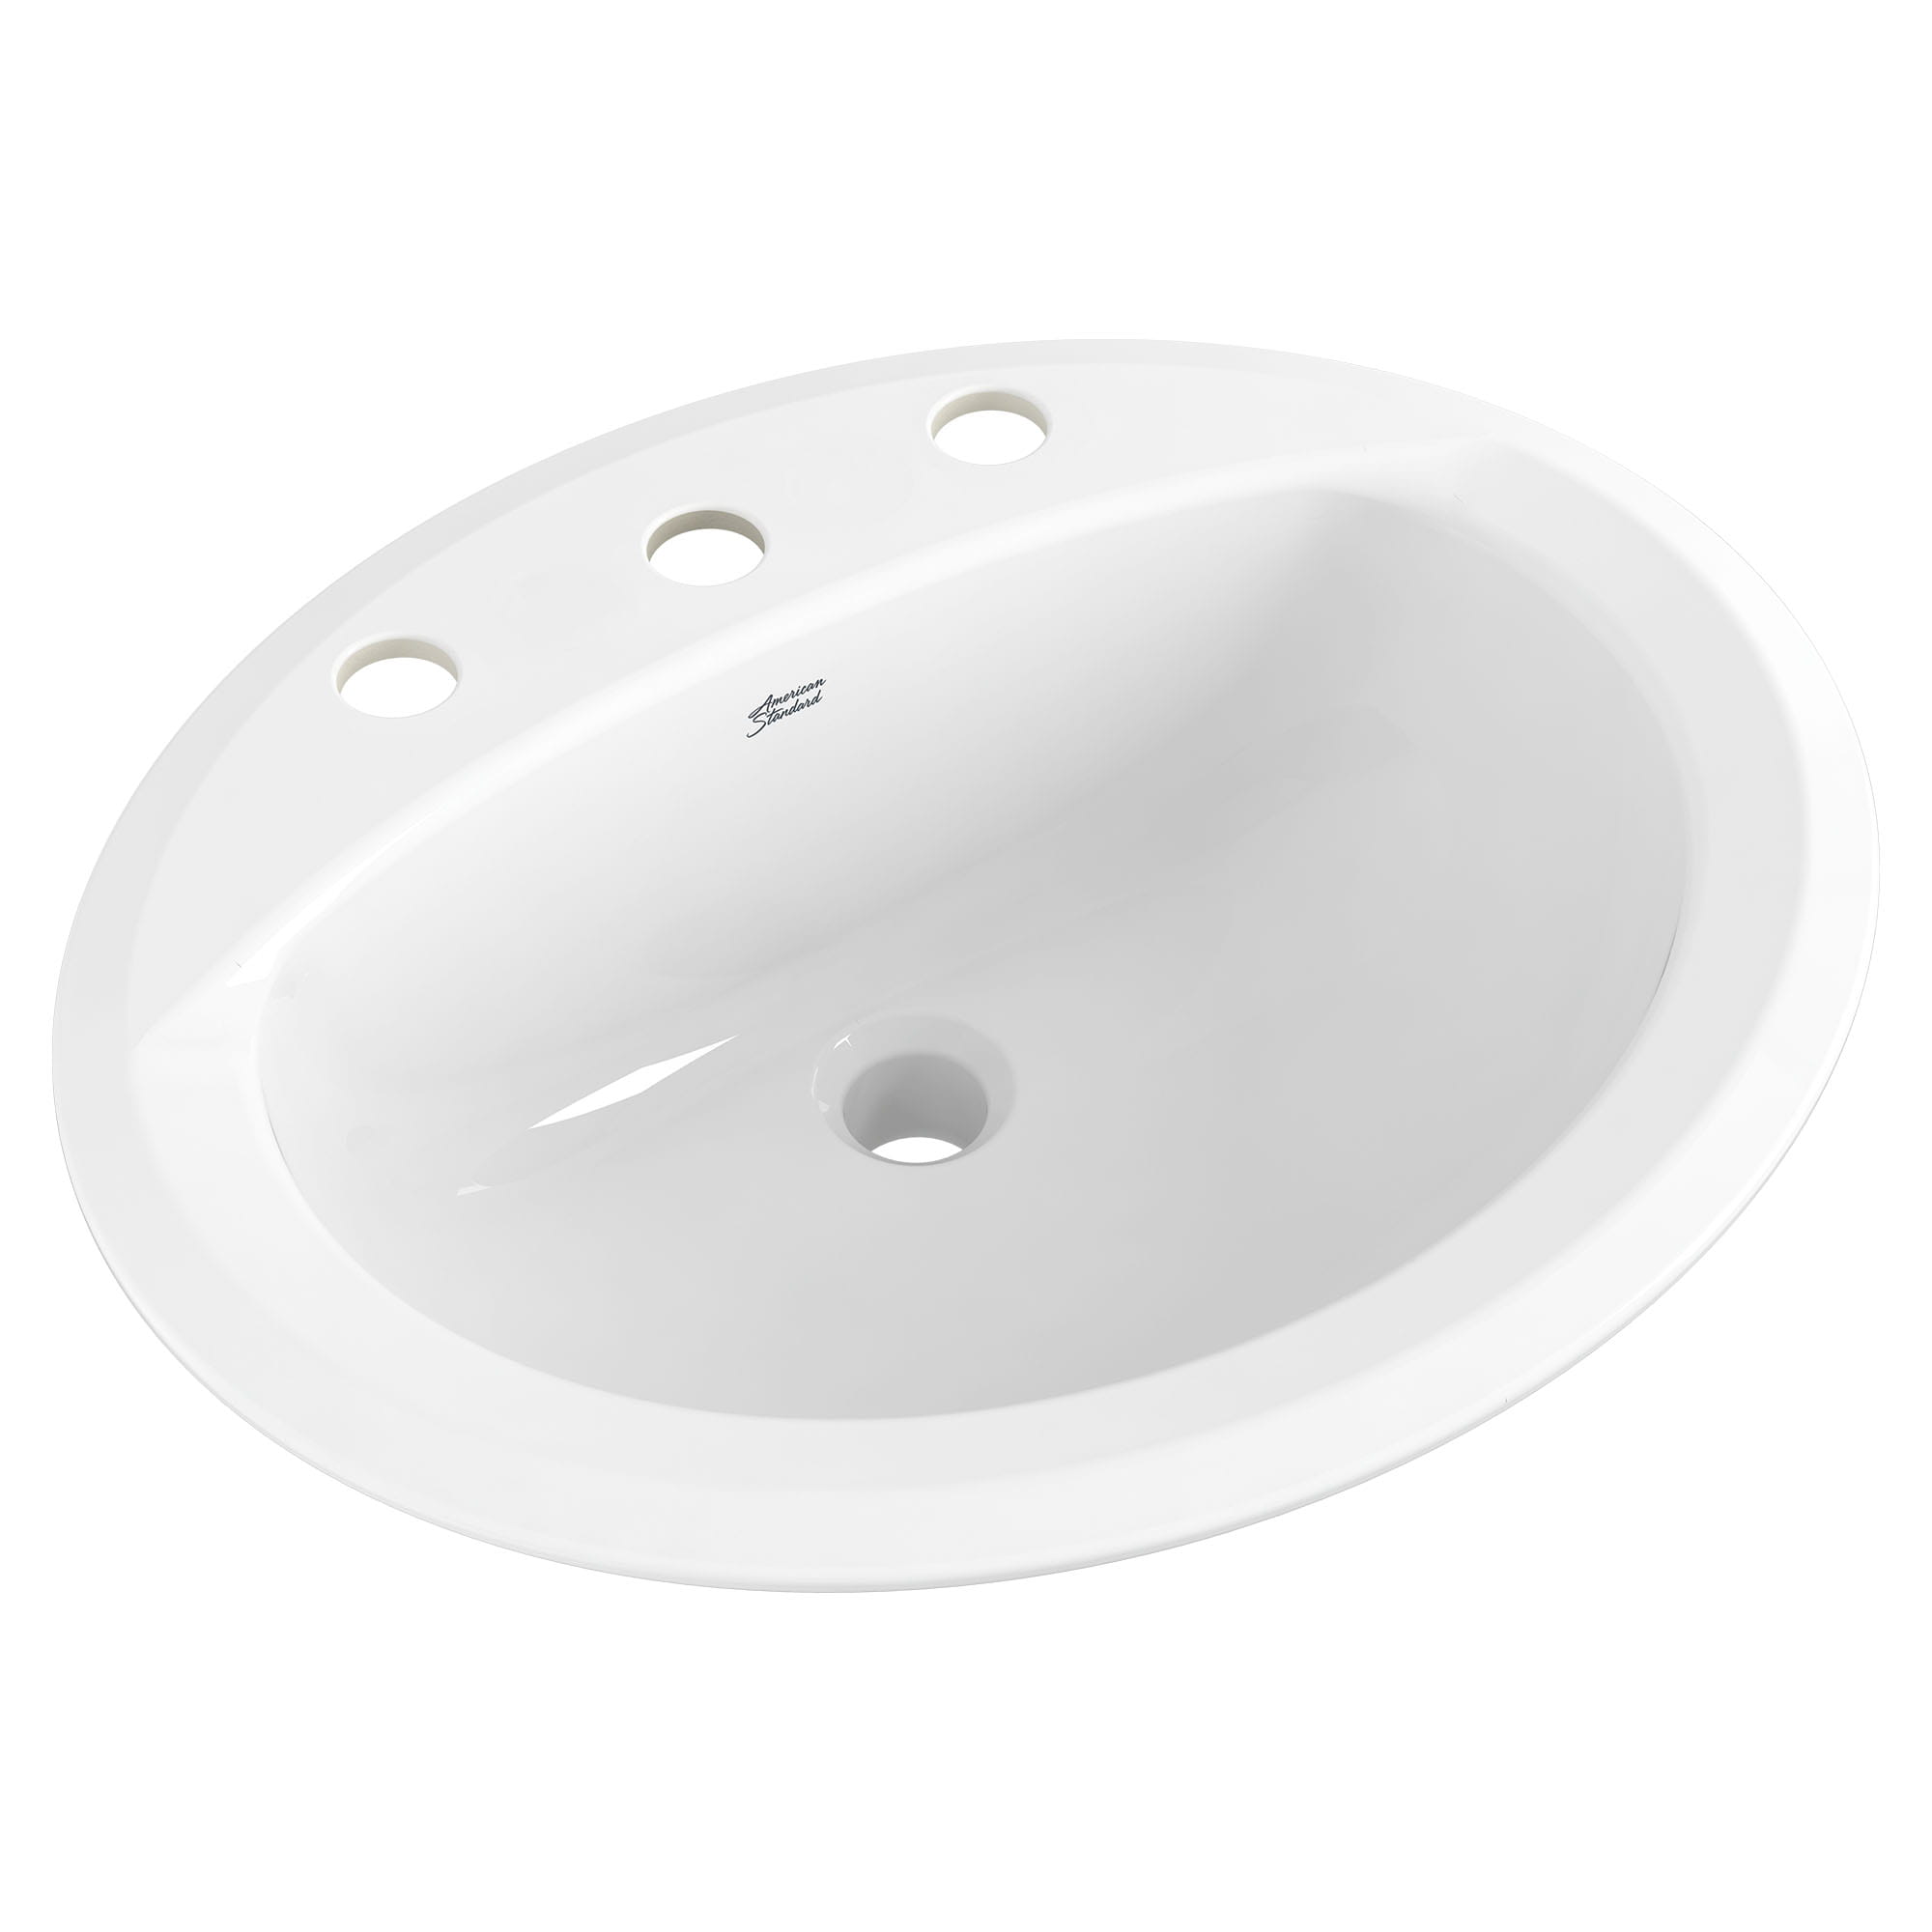 Reliant Oval Drop-In Bathroom Sink, 8-in. Widespread Holes